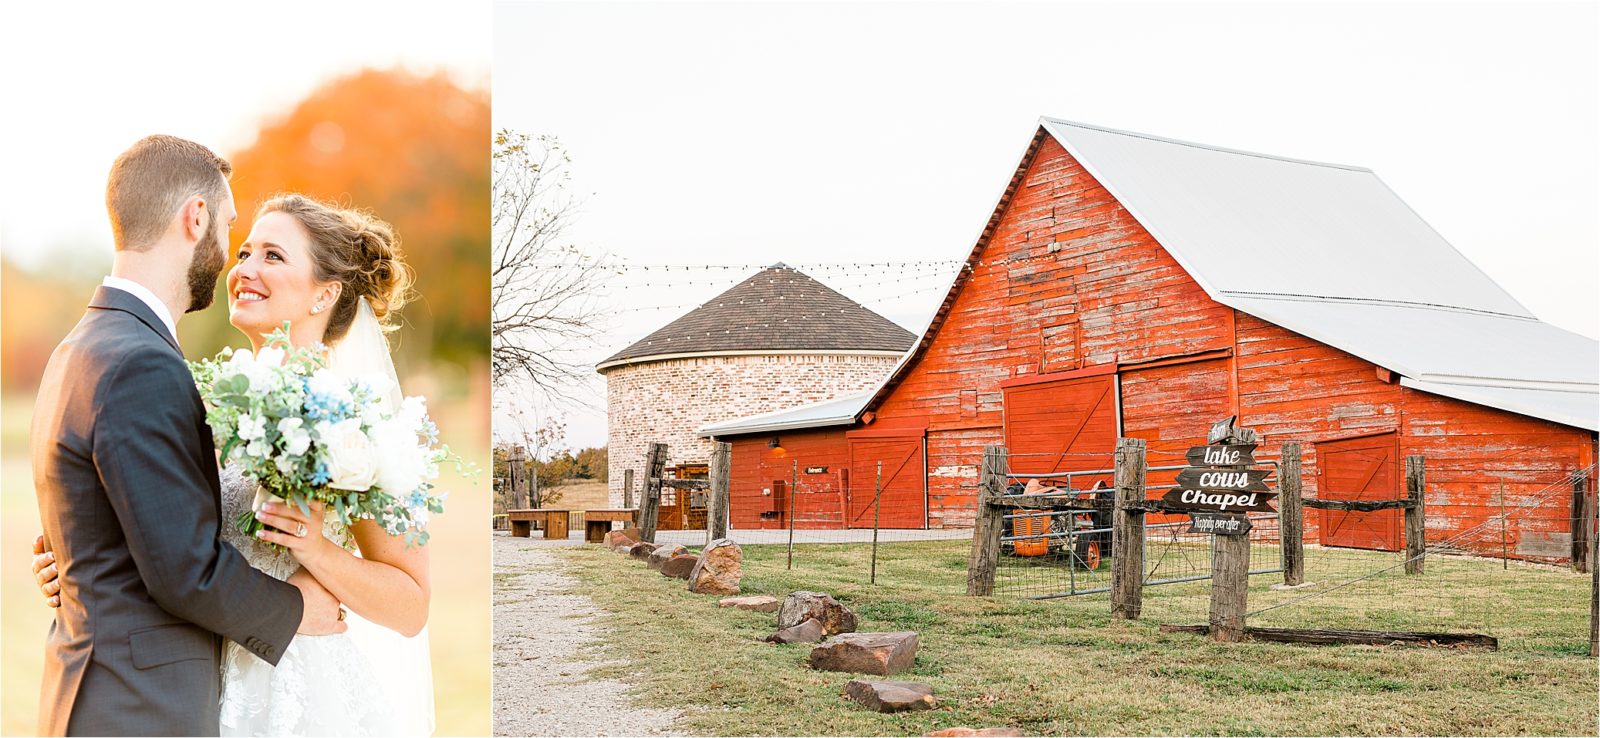 Red Barn Wedding Venue in Dallas Ft. Worth Texas called Rustic Grace Estate by Jillian Hogan Photography 